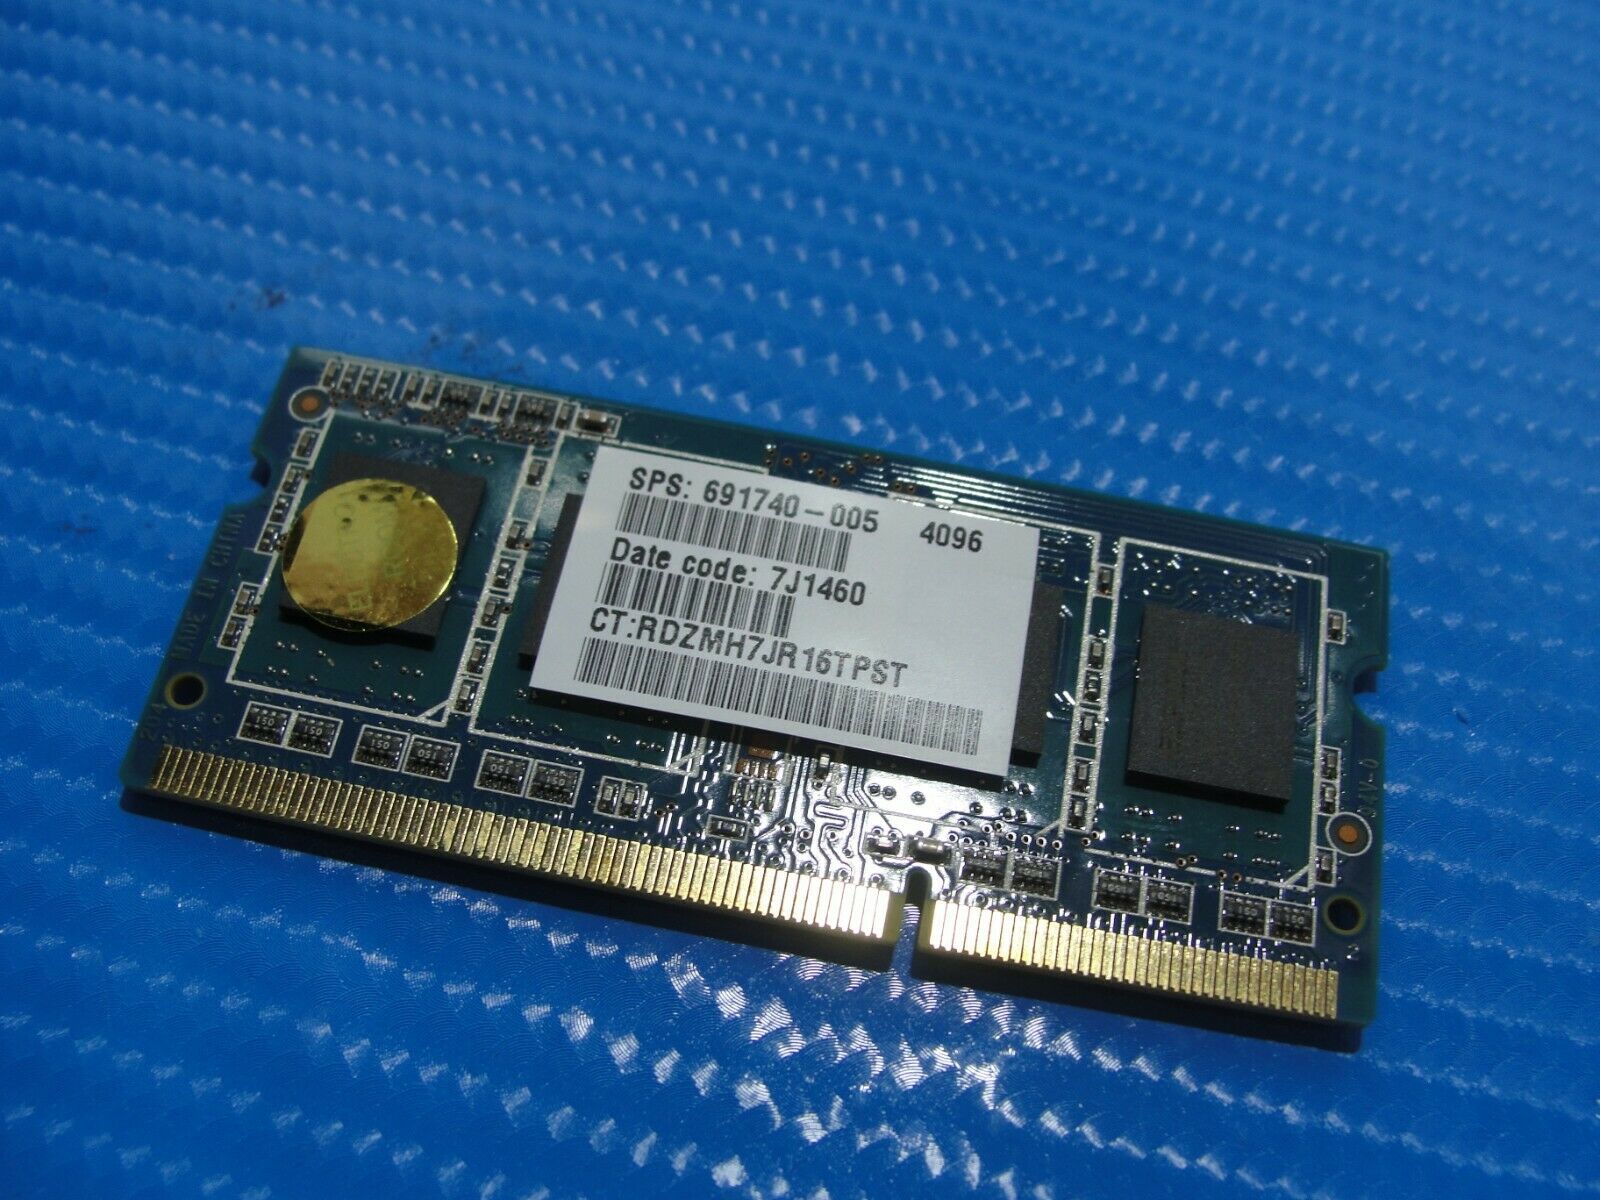 HP 15.6 15-g013cl Ramaxel SO-DIMM RAM Memory 4GB PC3L-12800S RMT3170EF68F9W-1600 HP